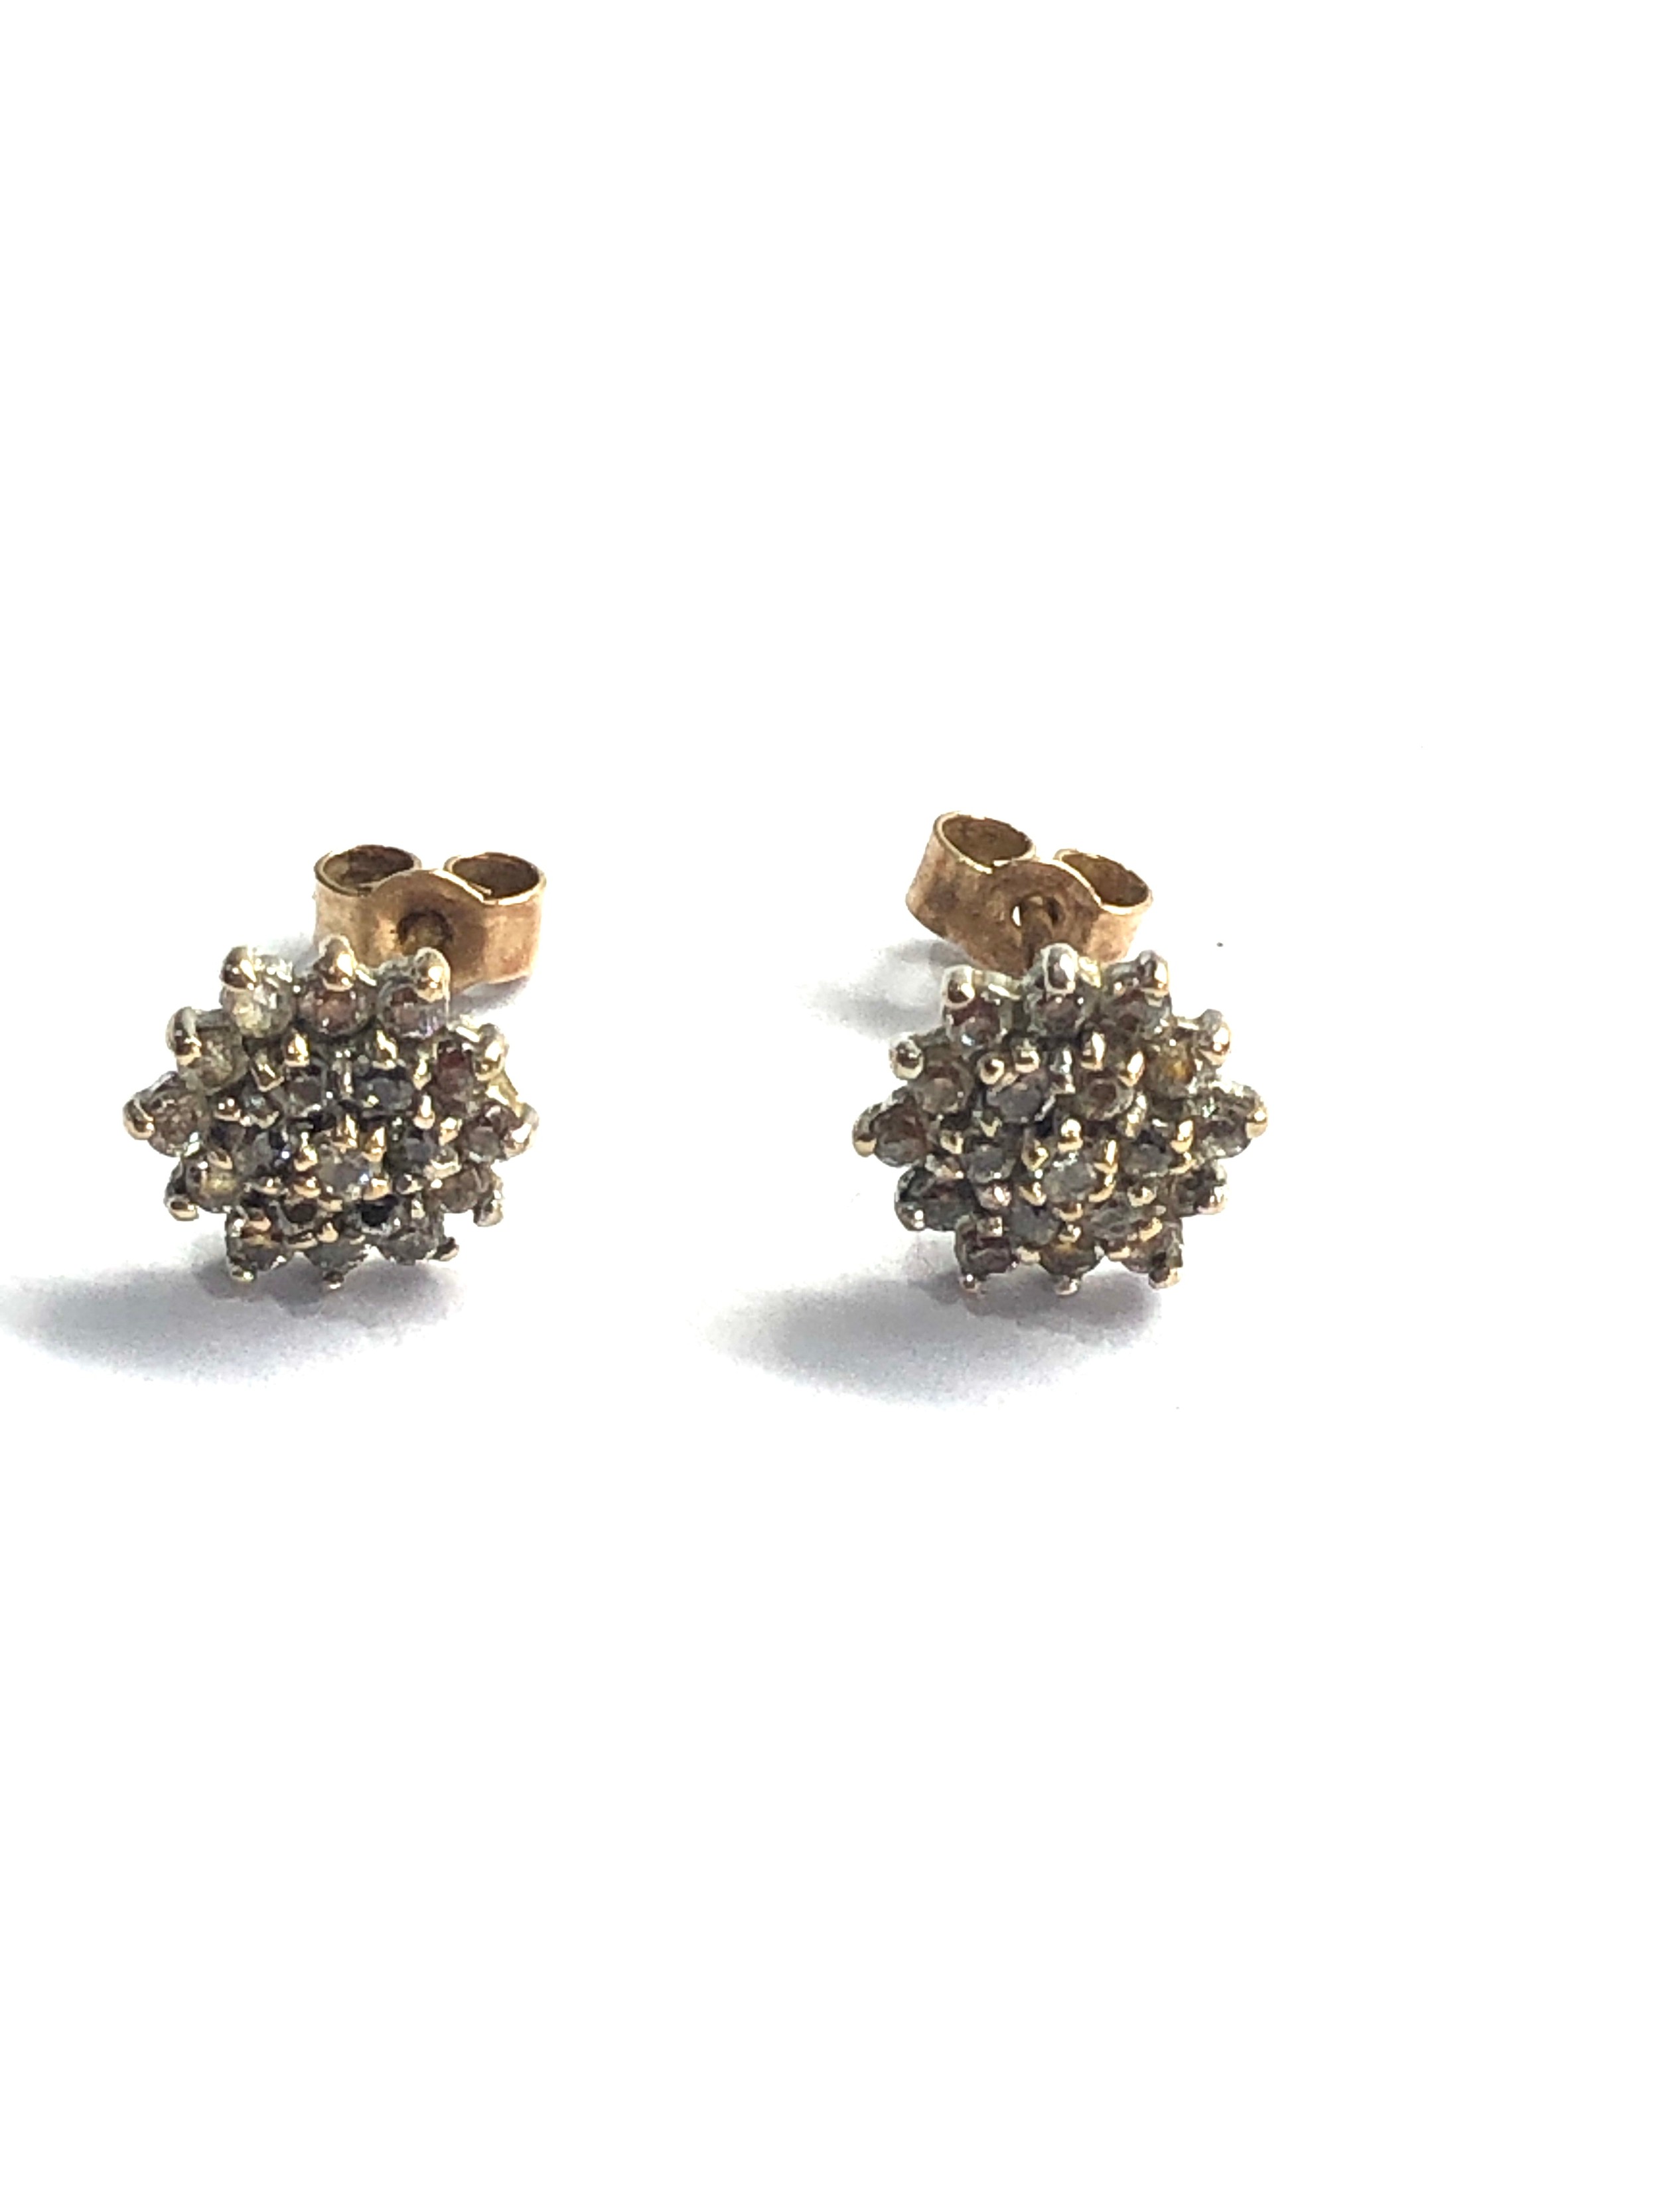 9ct gold diamond earrings weight 1.3g 0.25ct diamonds